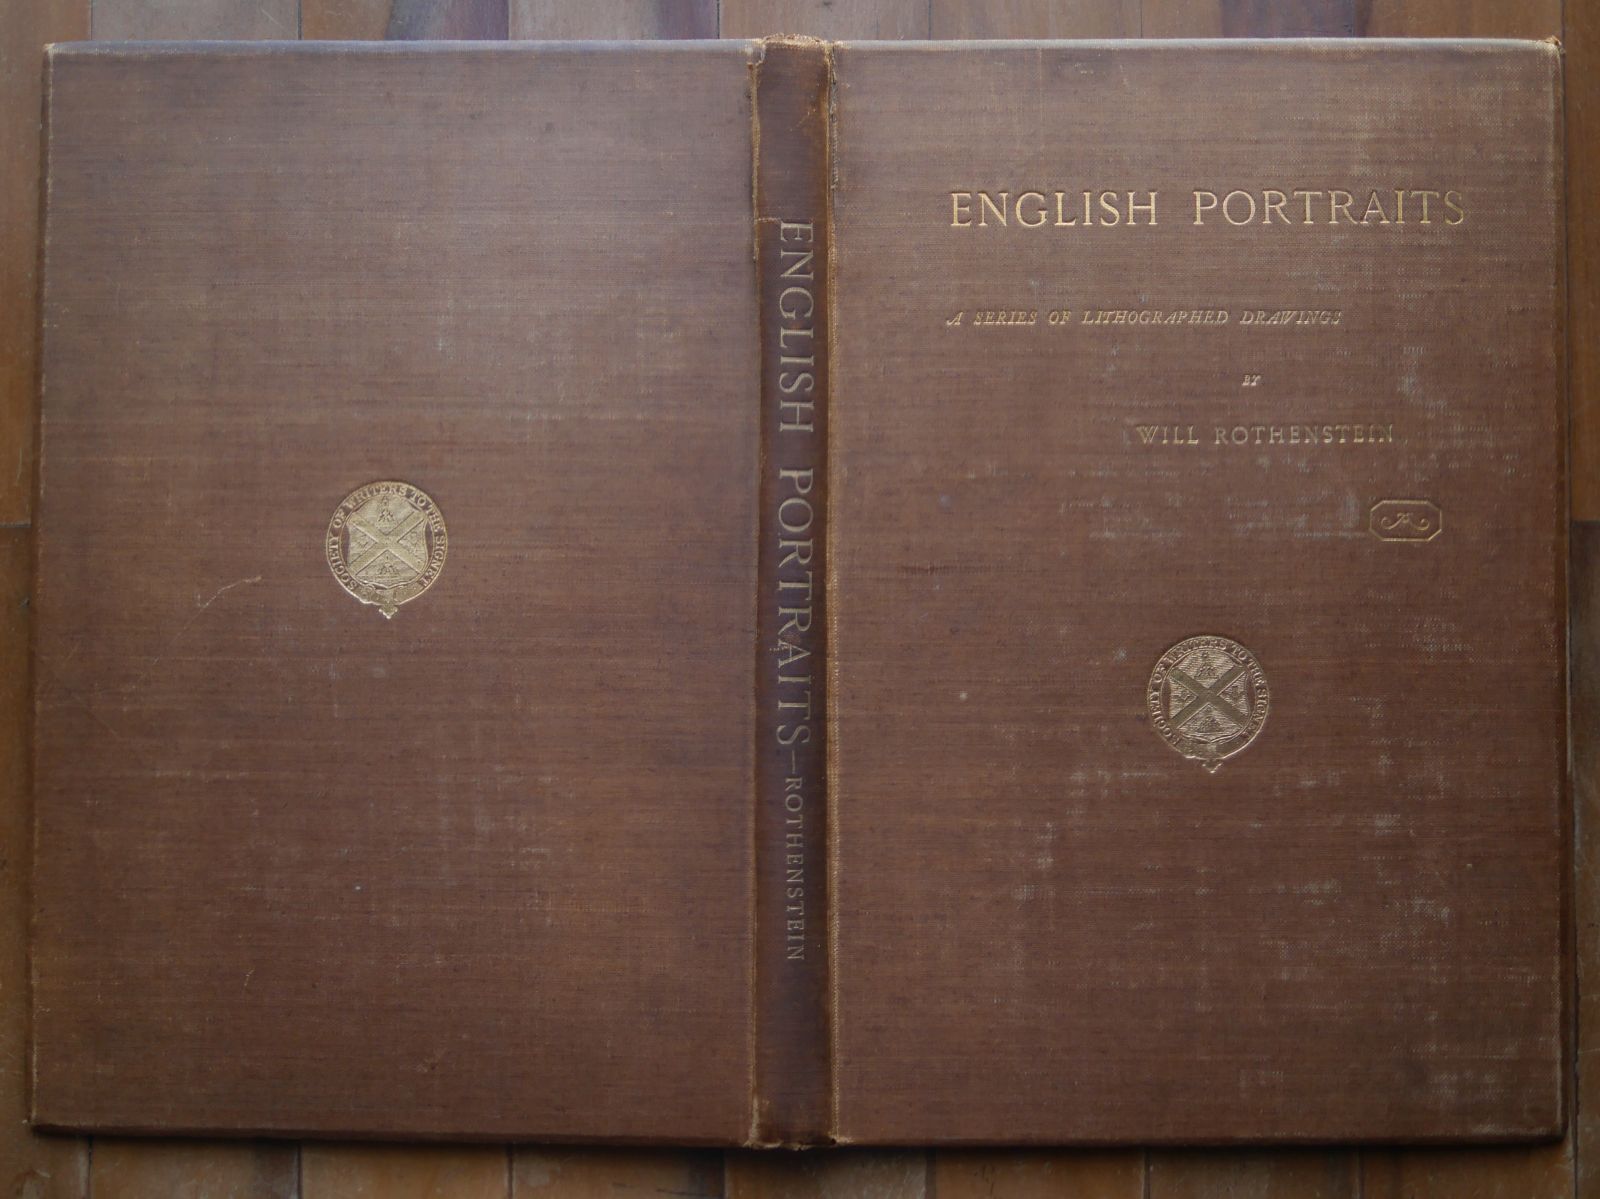 William Rothenstein『English Portraits』（1898年、Grant Richards）表紙02